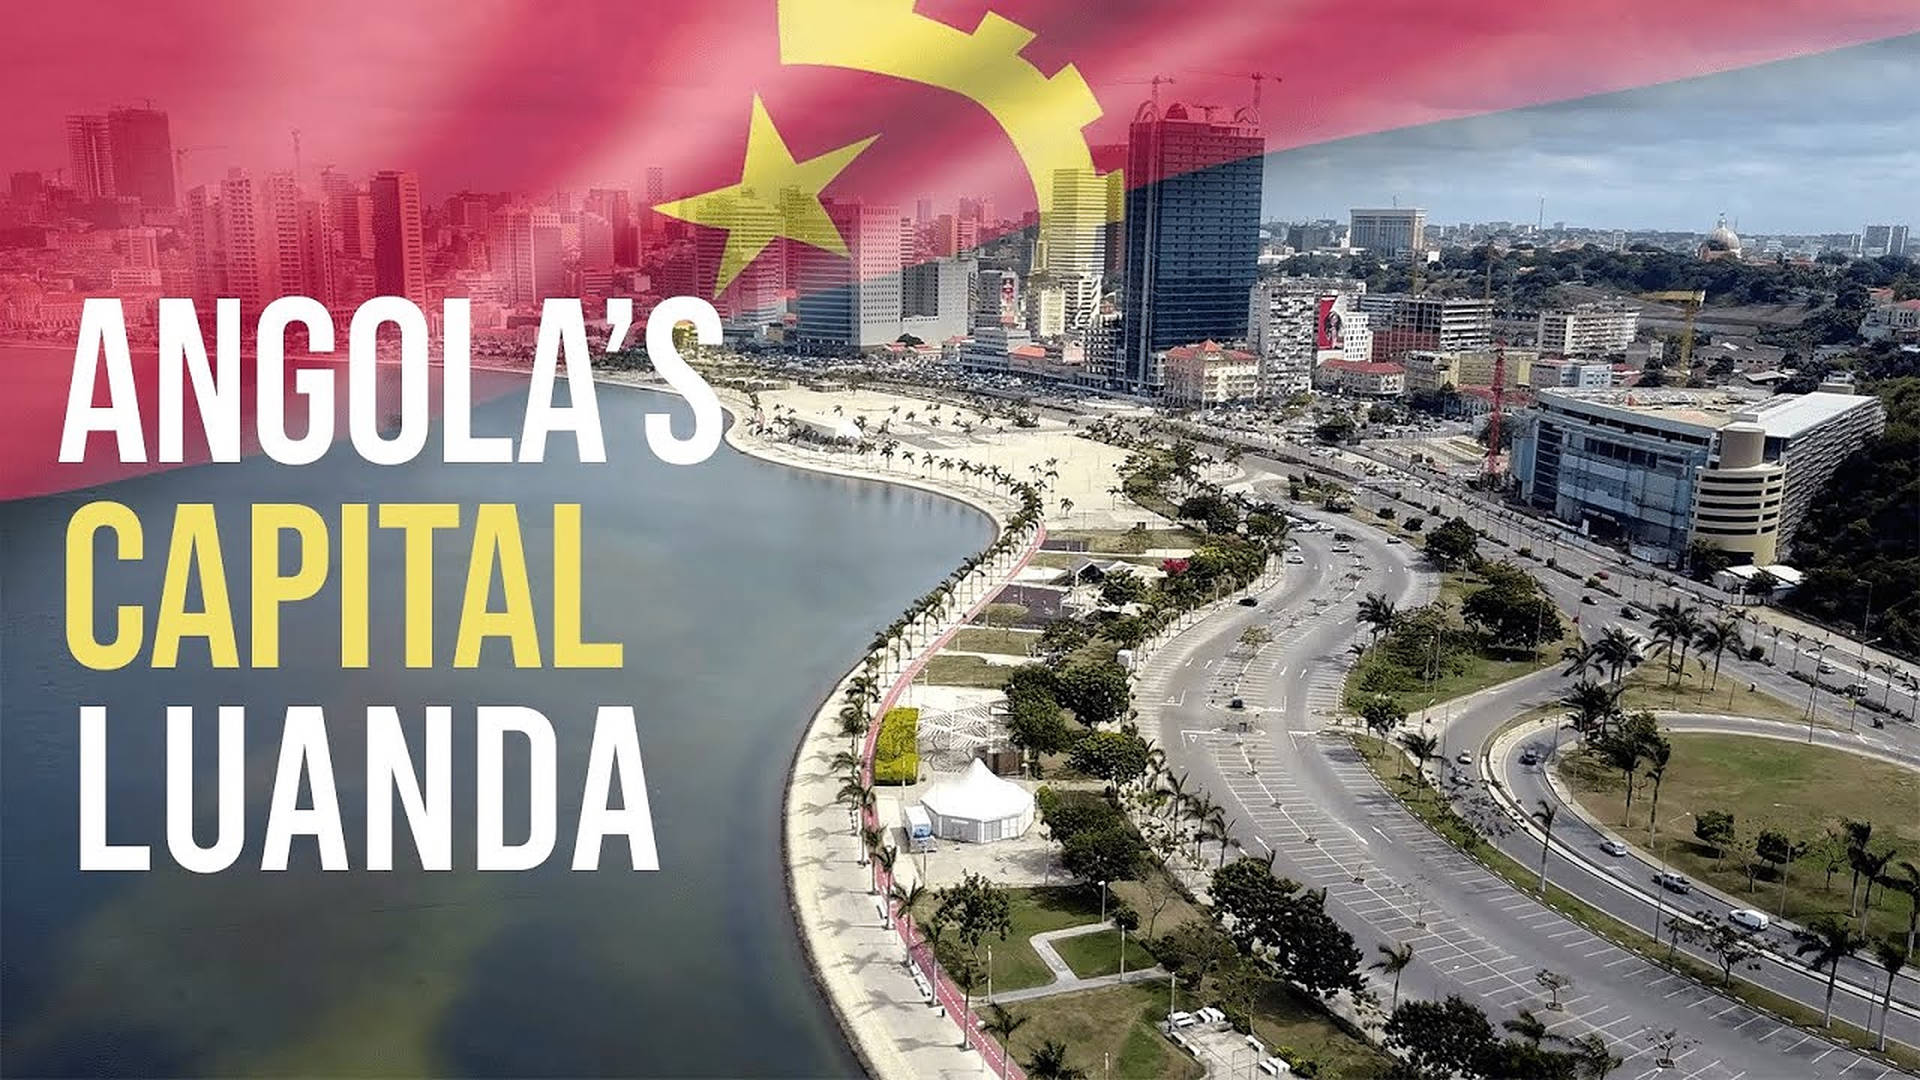 Scenen fra Angola's hovedstad Luanda på væggen Wallpaper